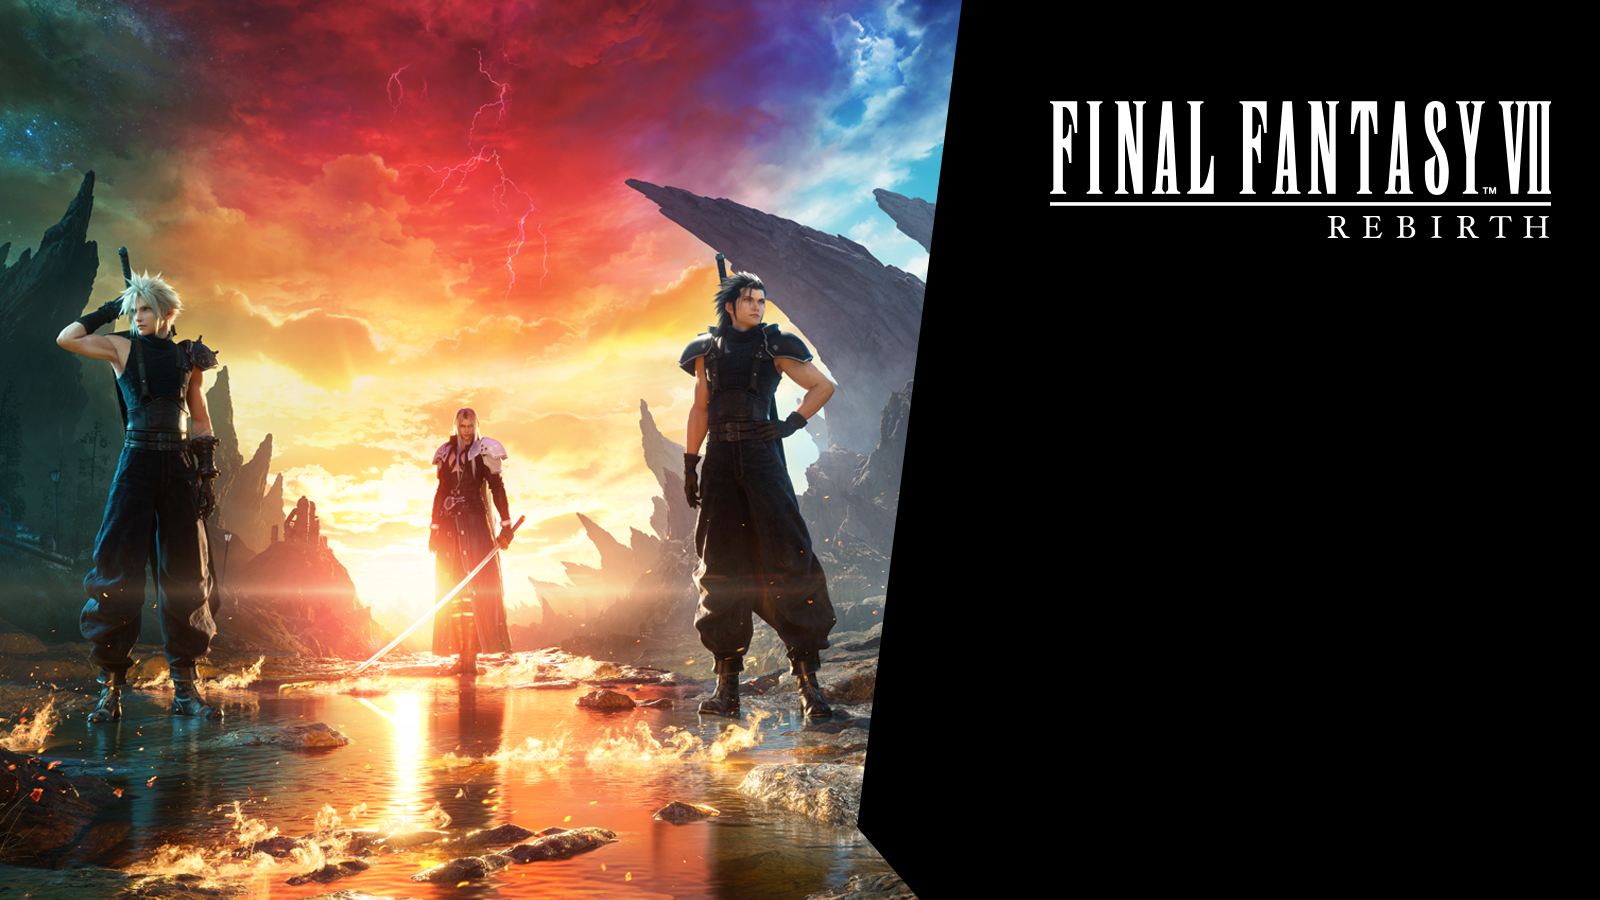 The Legend of Final Fantasy VIII (Hardcover)